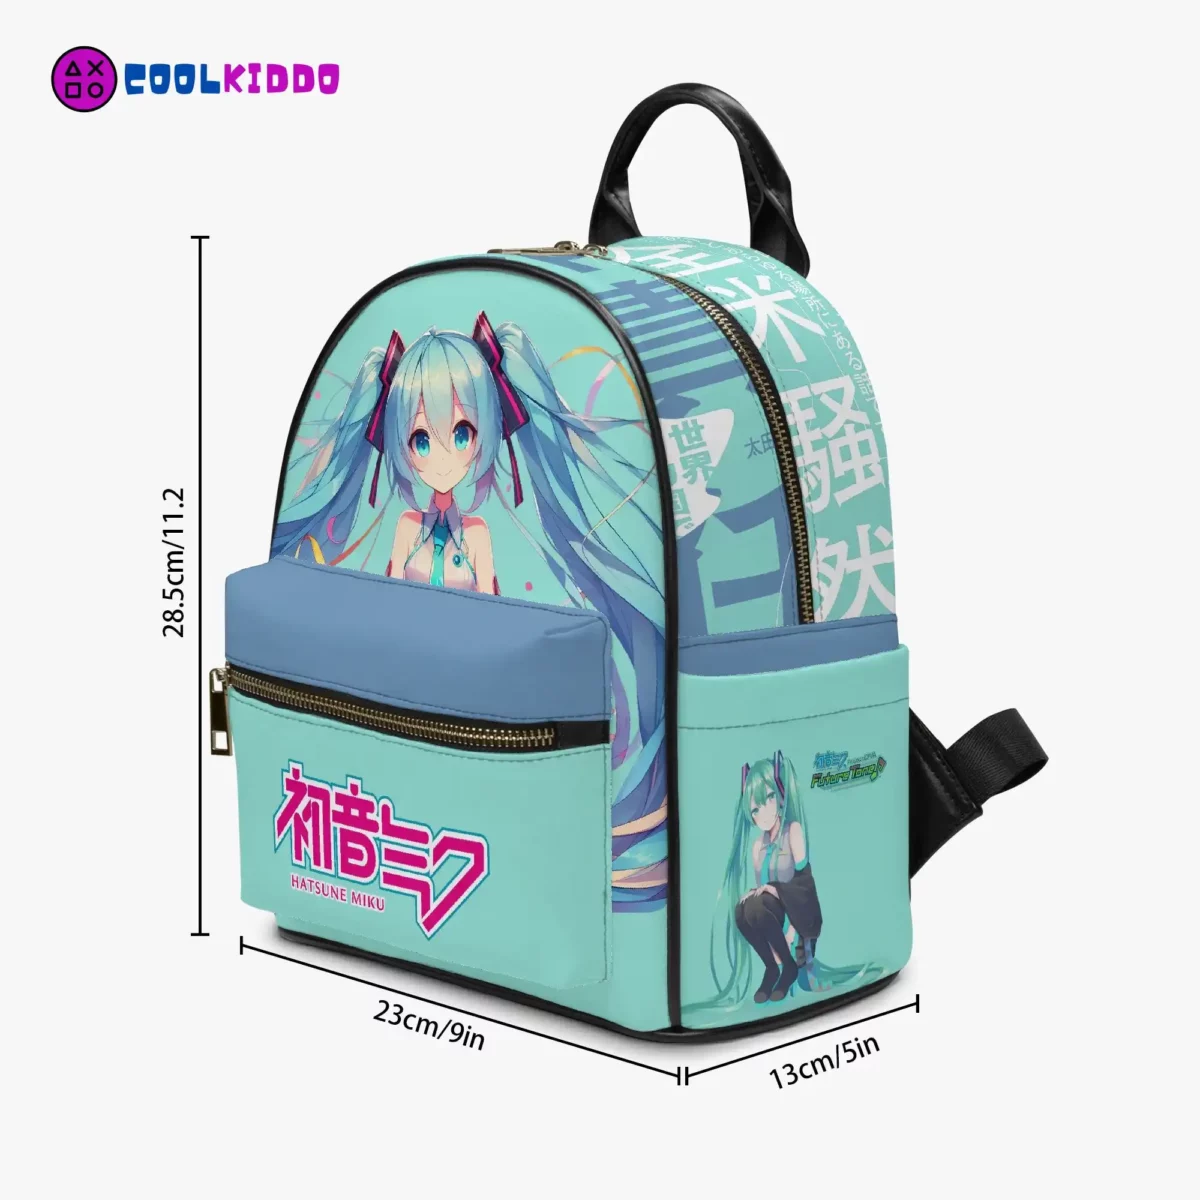 Hatsune Miku Anime Style Mini Leather Backpack For Girls/Youth | School Book Bag Cool Kiddo 16